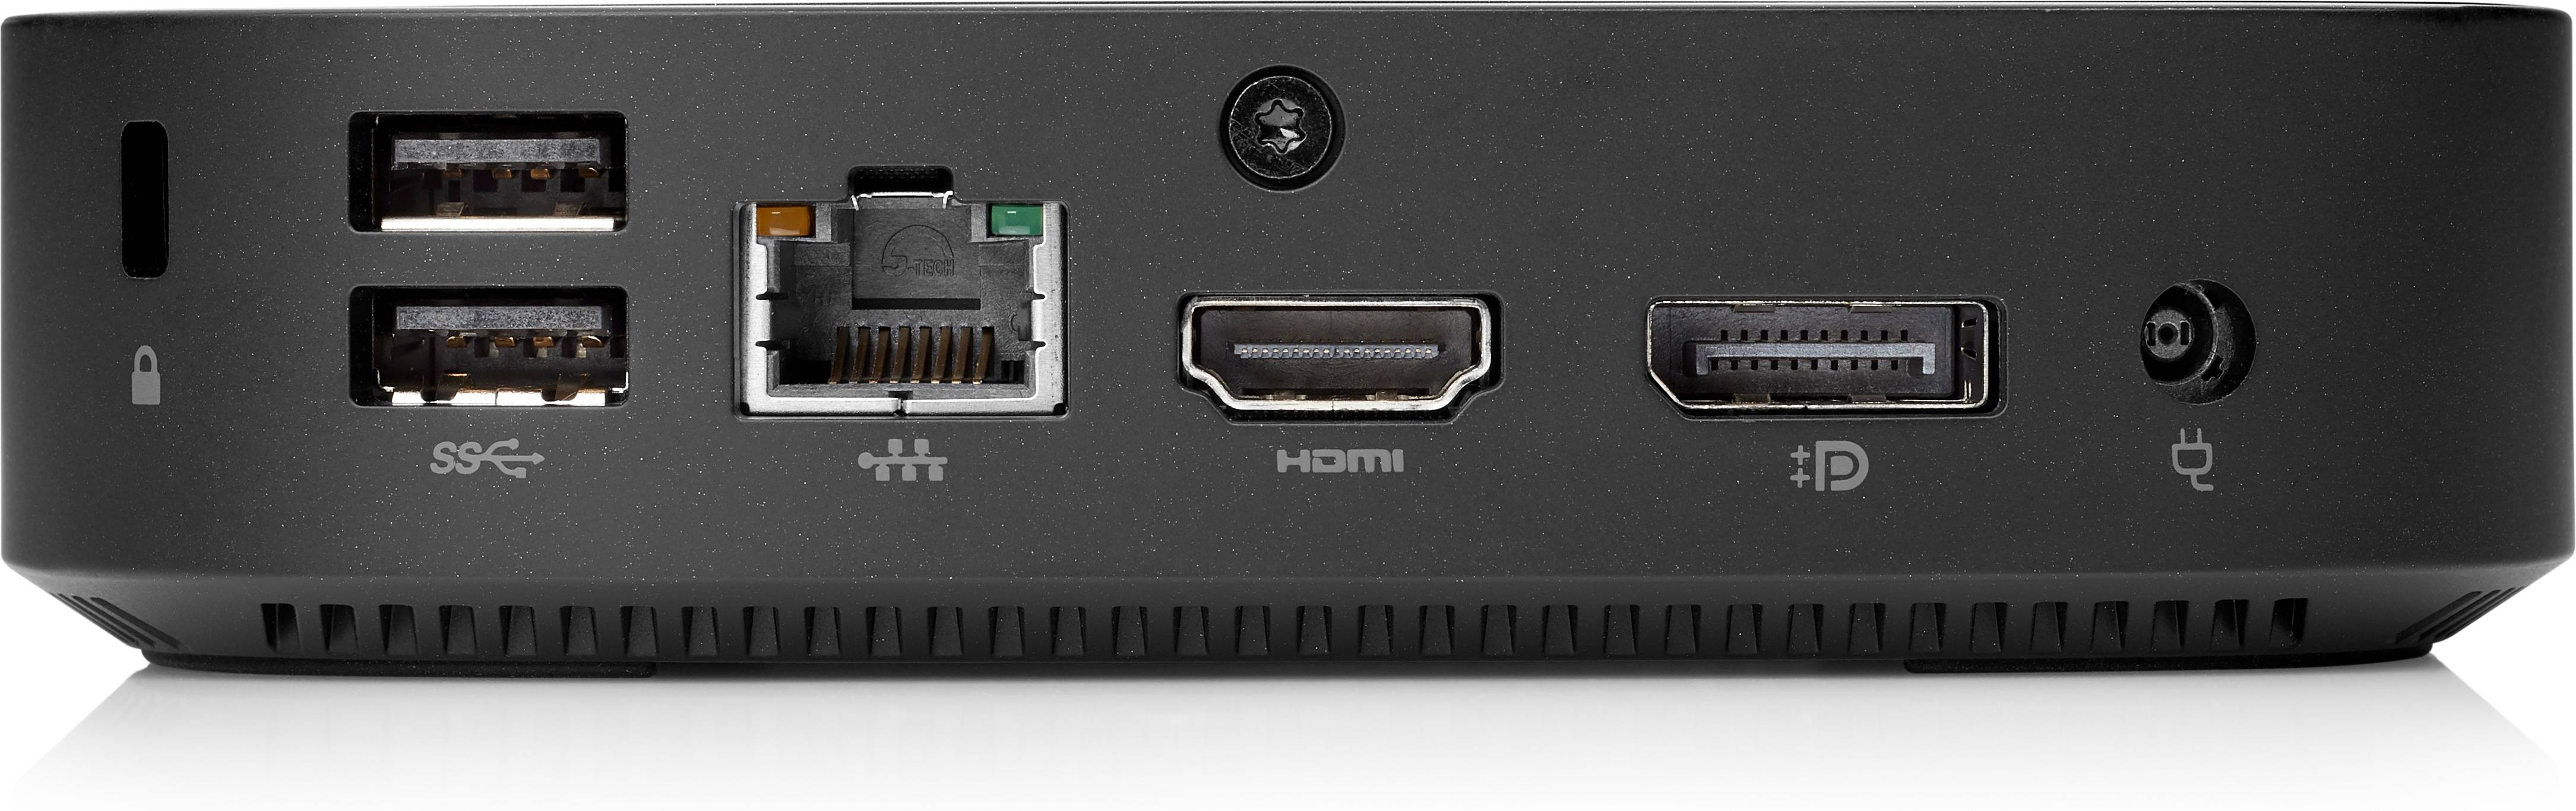 Rca Informatique - image du produit : T430 CELERON N4020 4GB 32GB HDMI USB W10